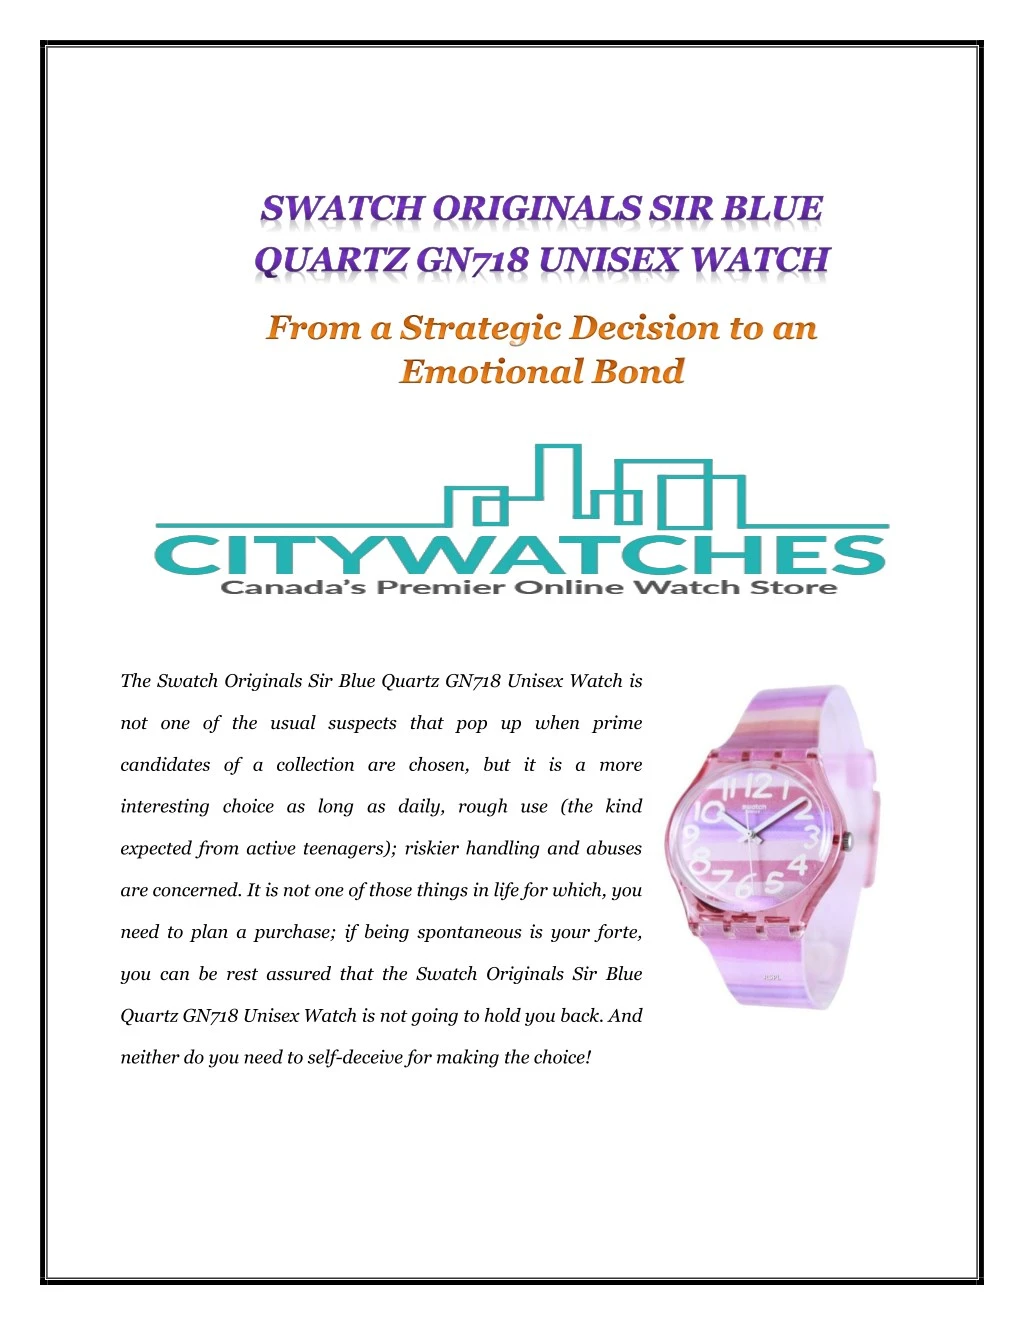 the swatch originals sir blue quartz gn718 unisex